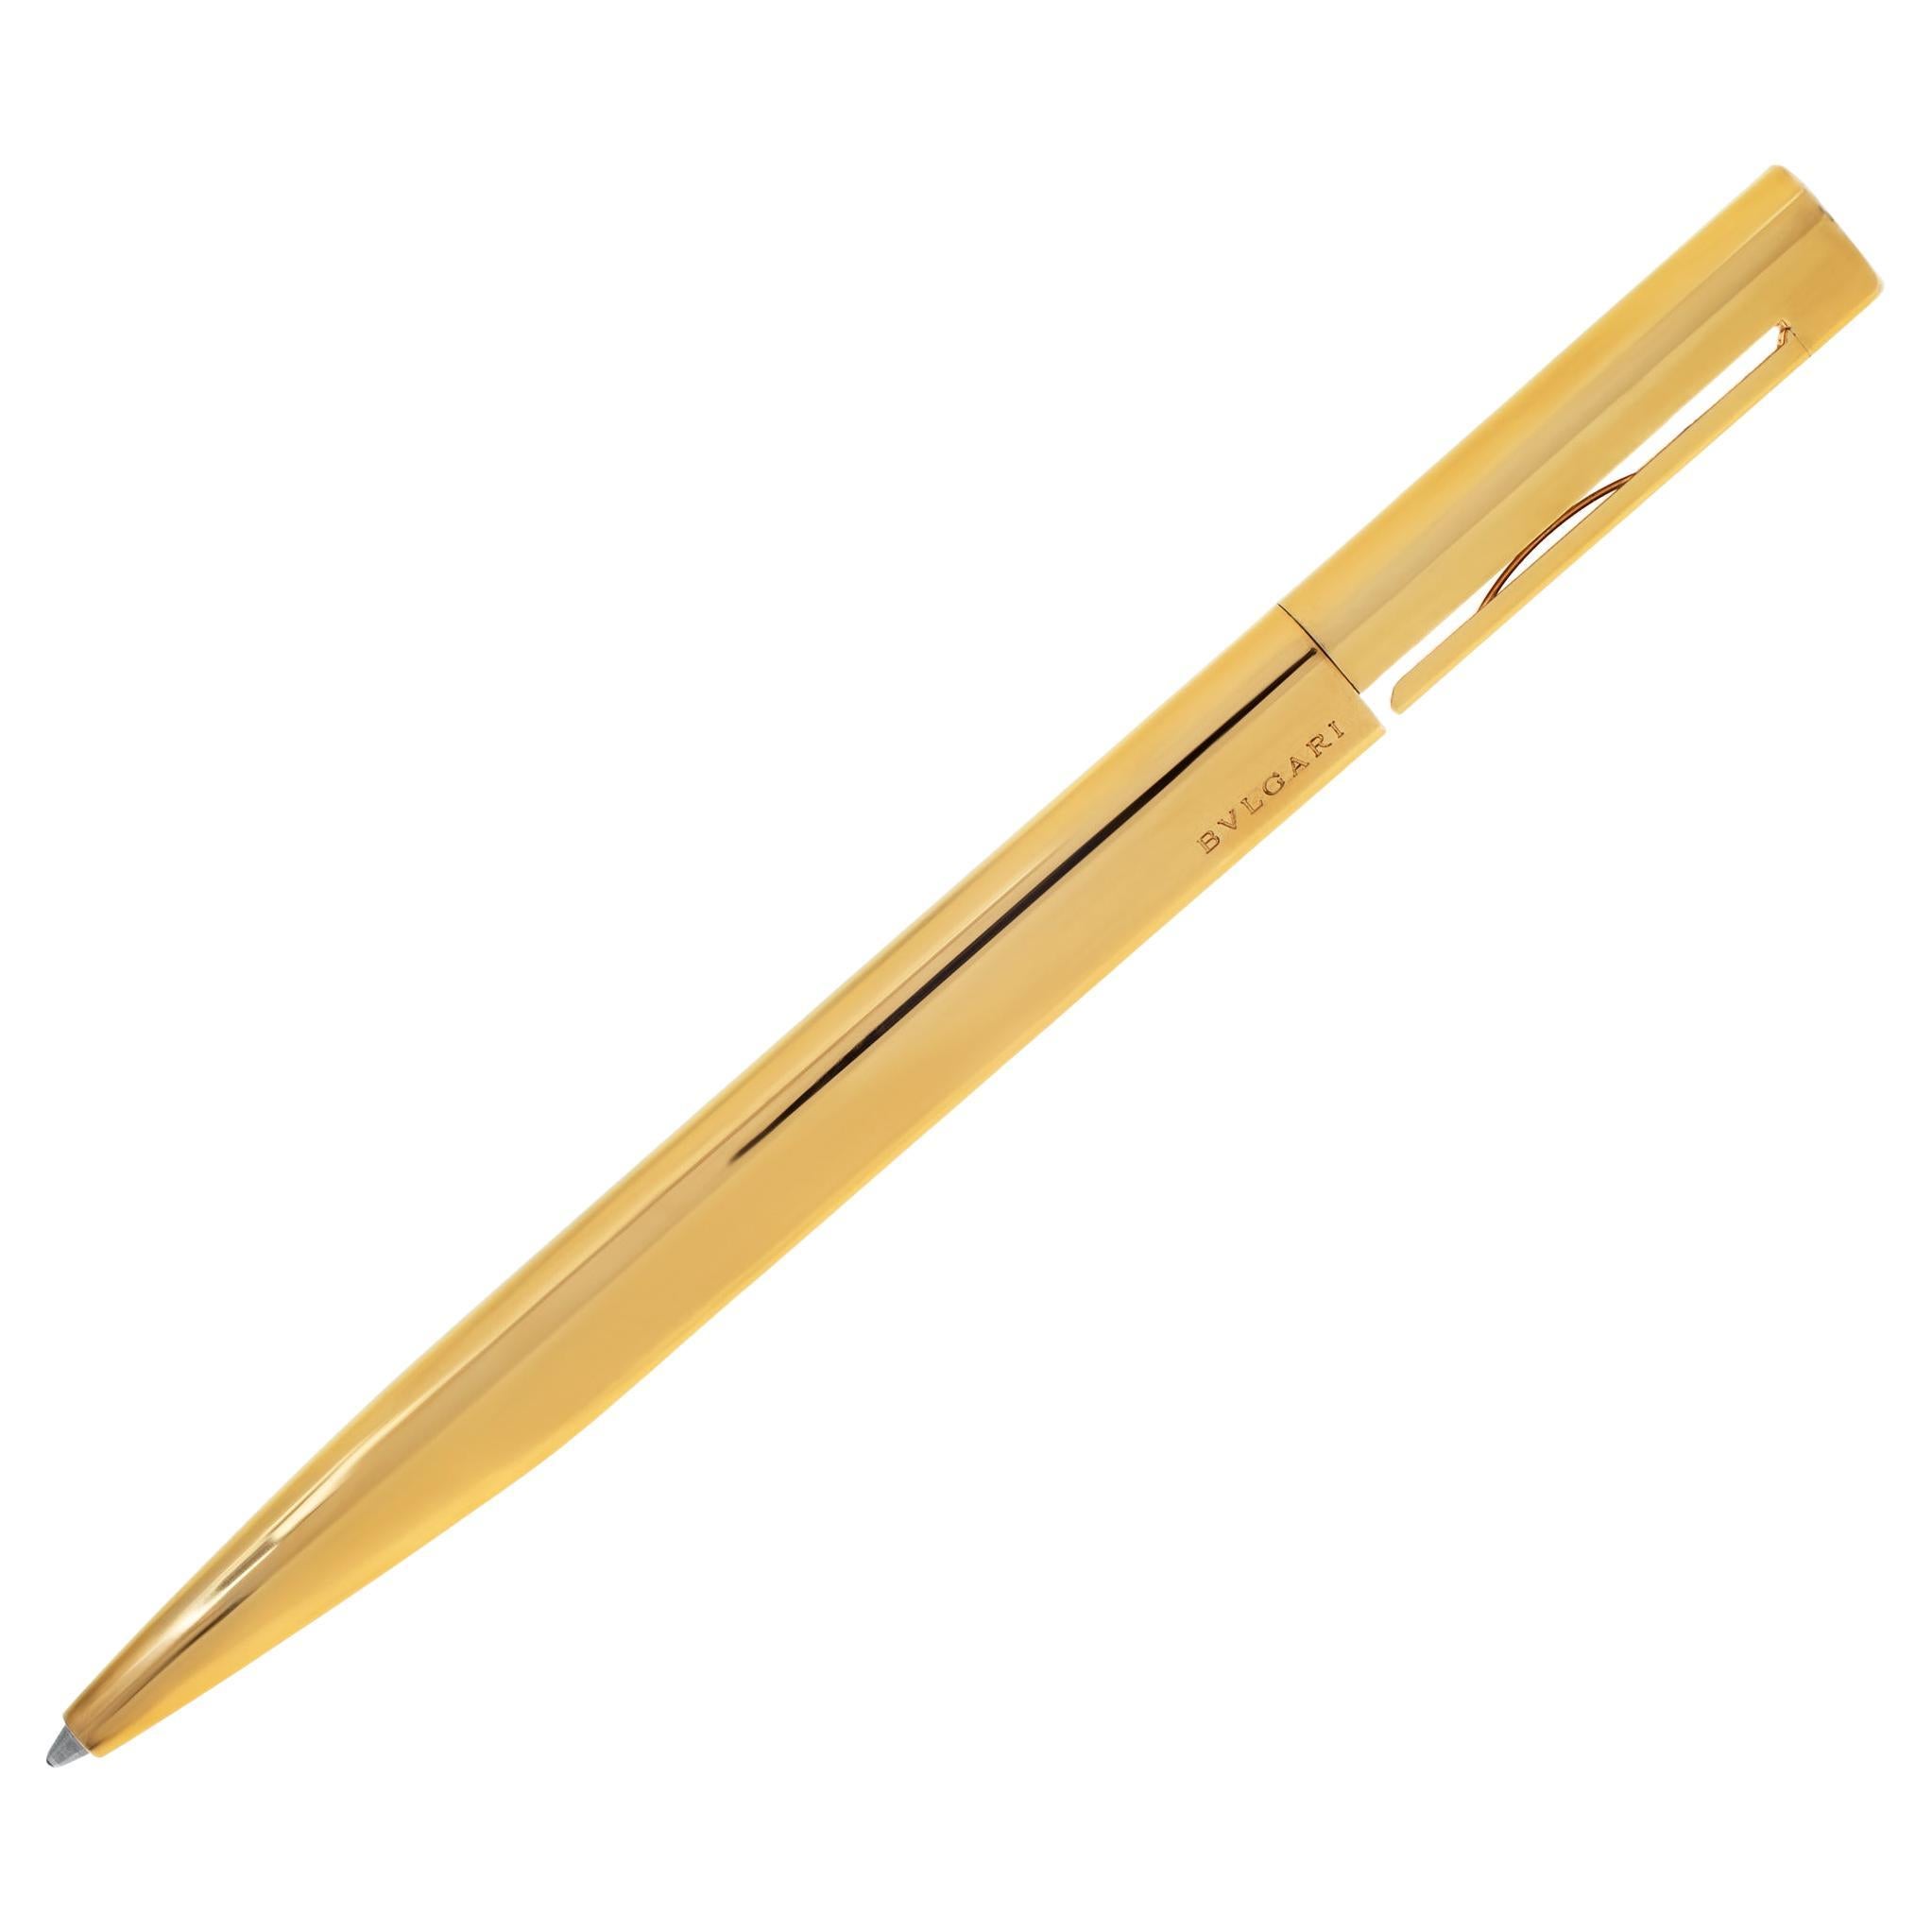 Bvlgari 18k yellow gold plated pen